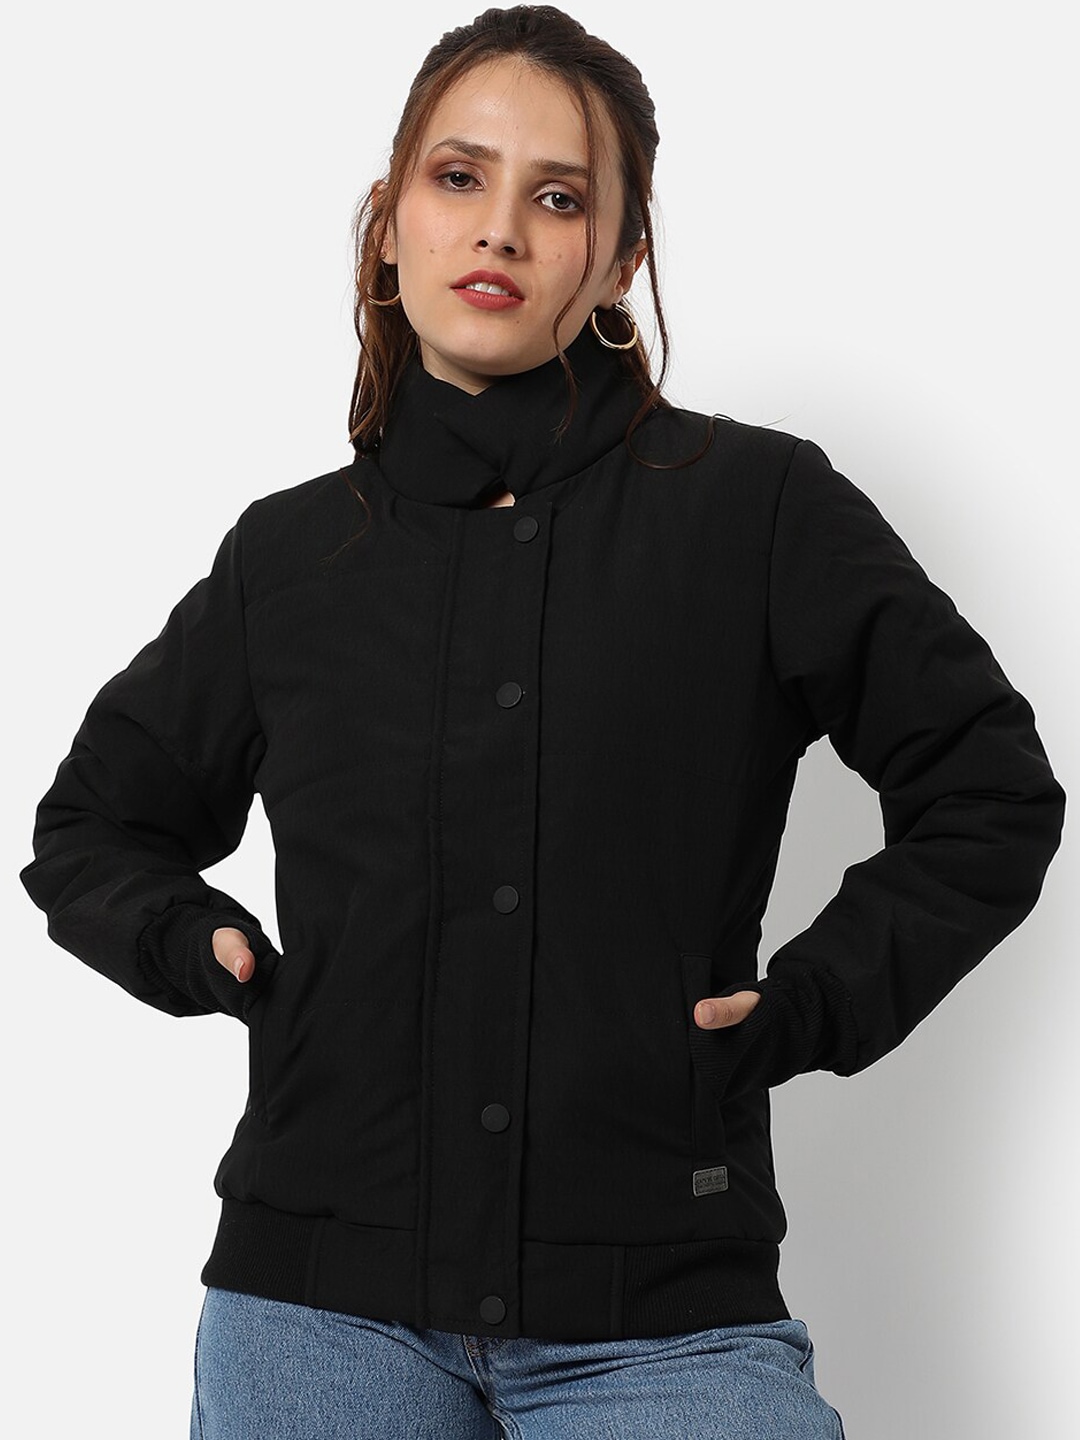 

Campus Sutra Women's Black Regular Fit Bomber Jacket For Winter Wear